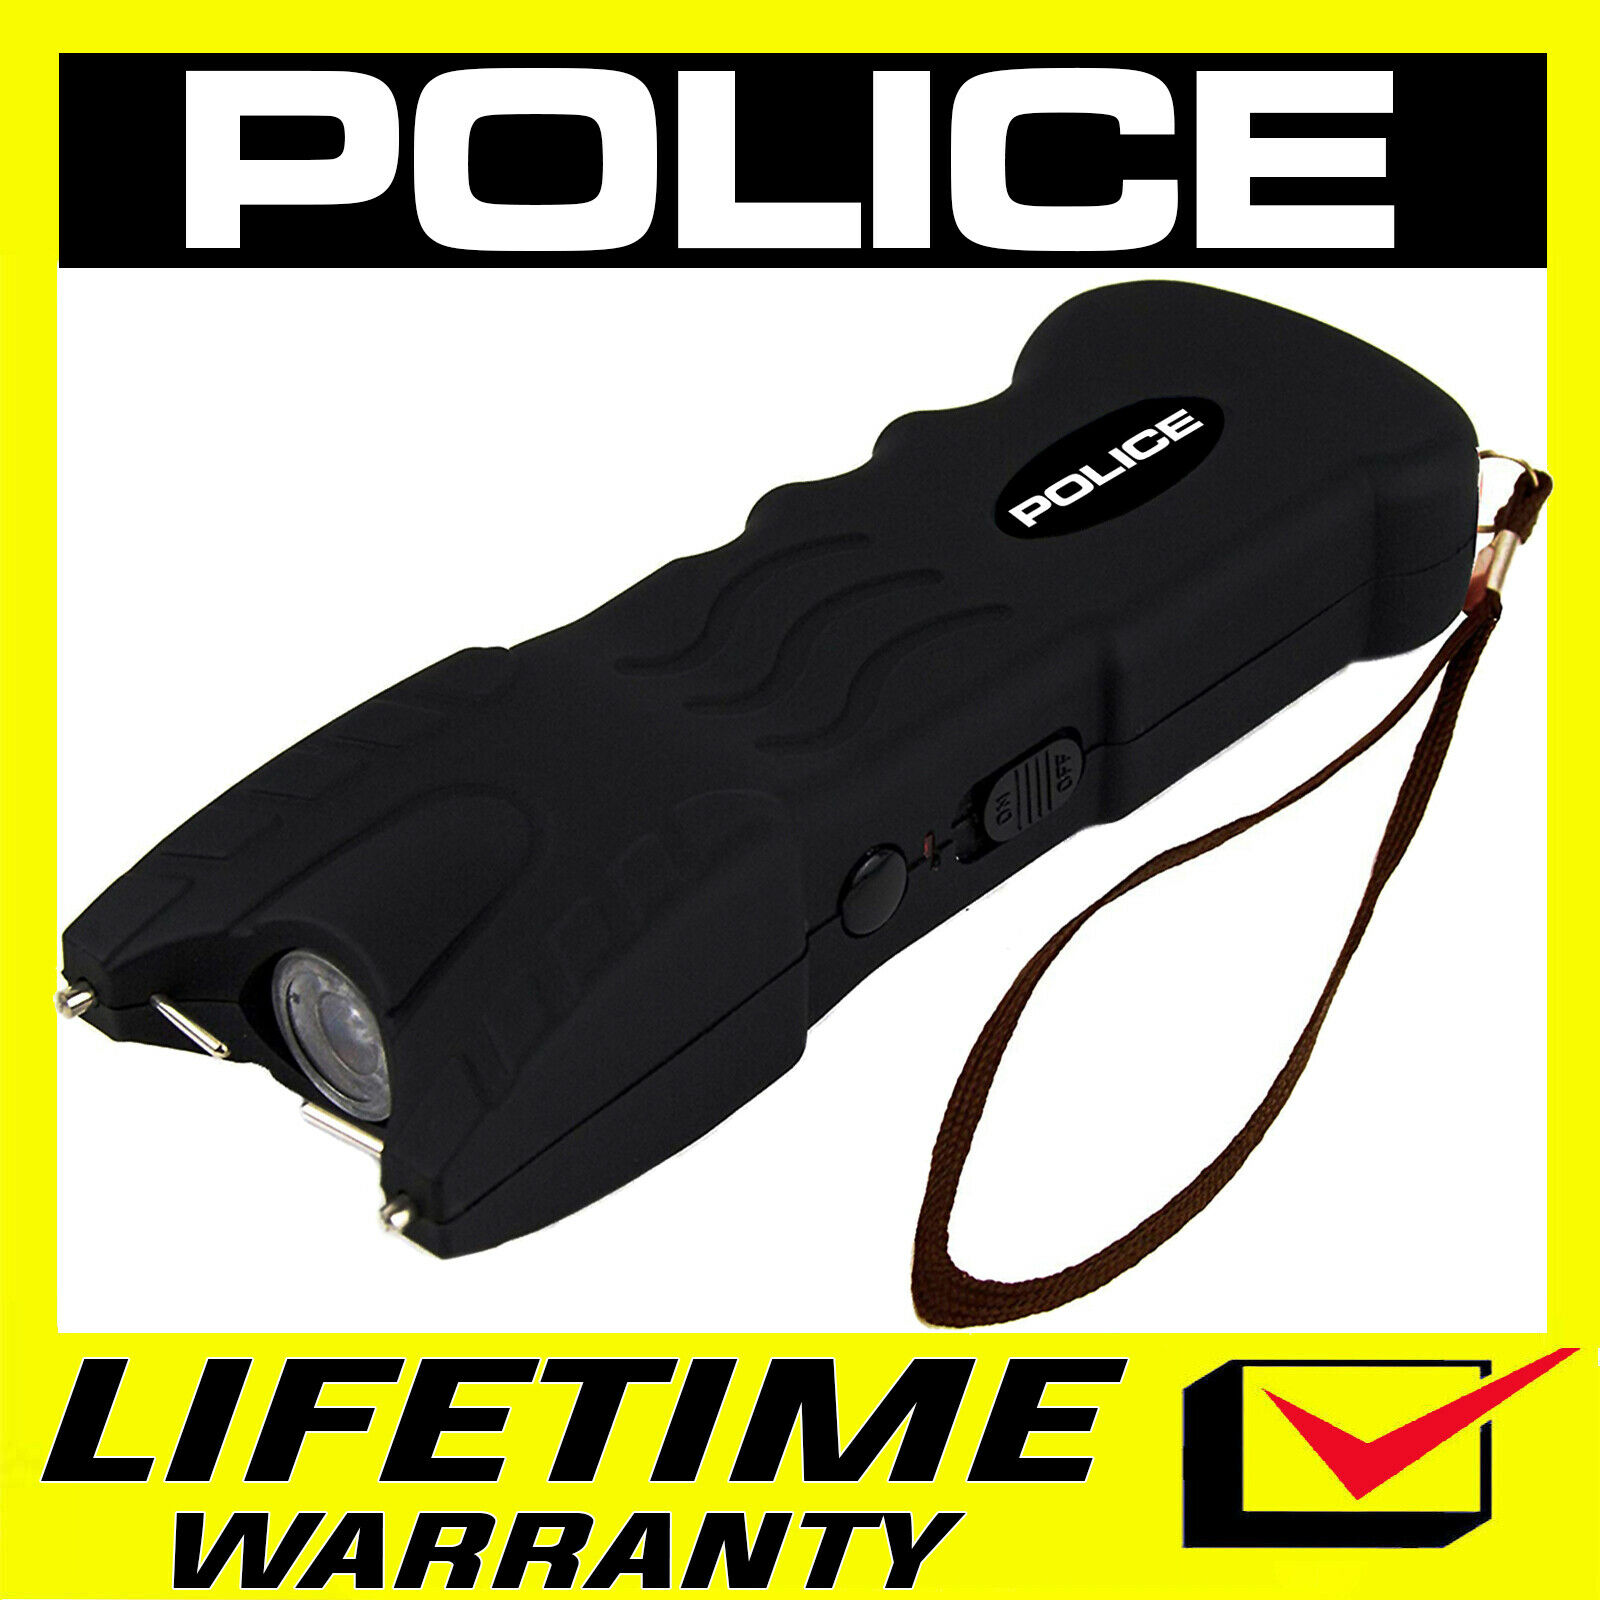 Police Stun Gun 916 650 Bv Max Voltage Rechargeable Led Flashlight - Black